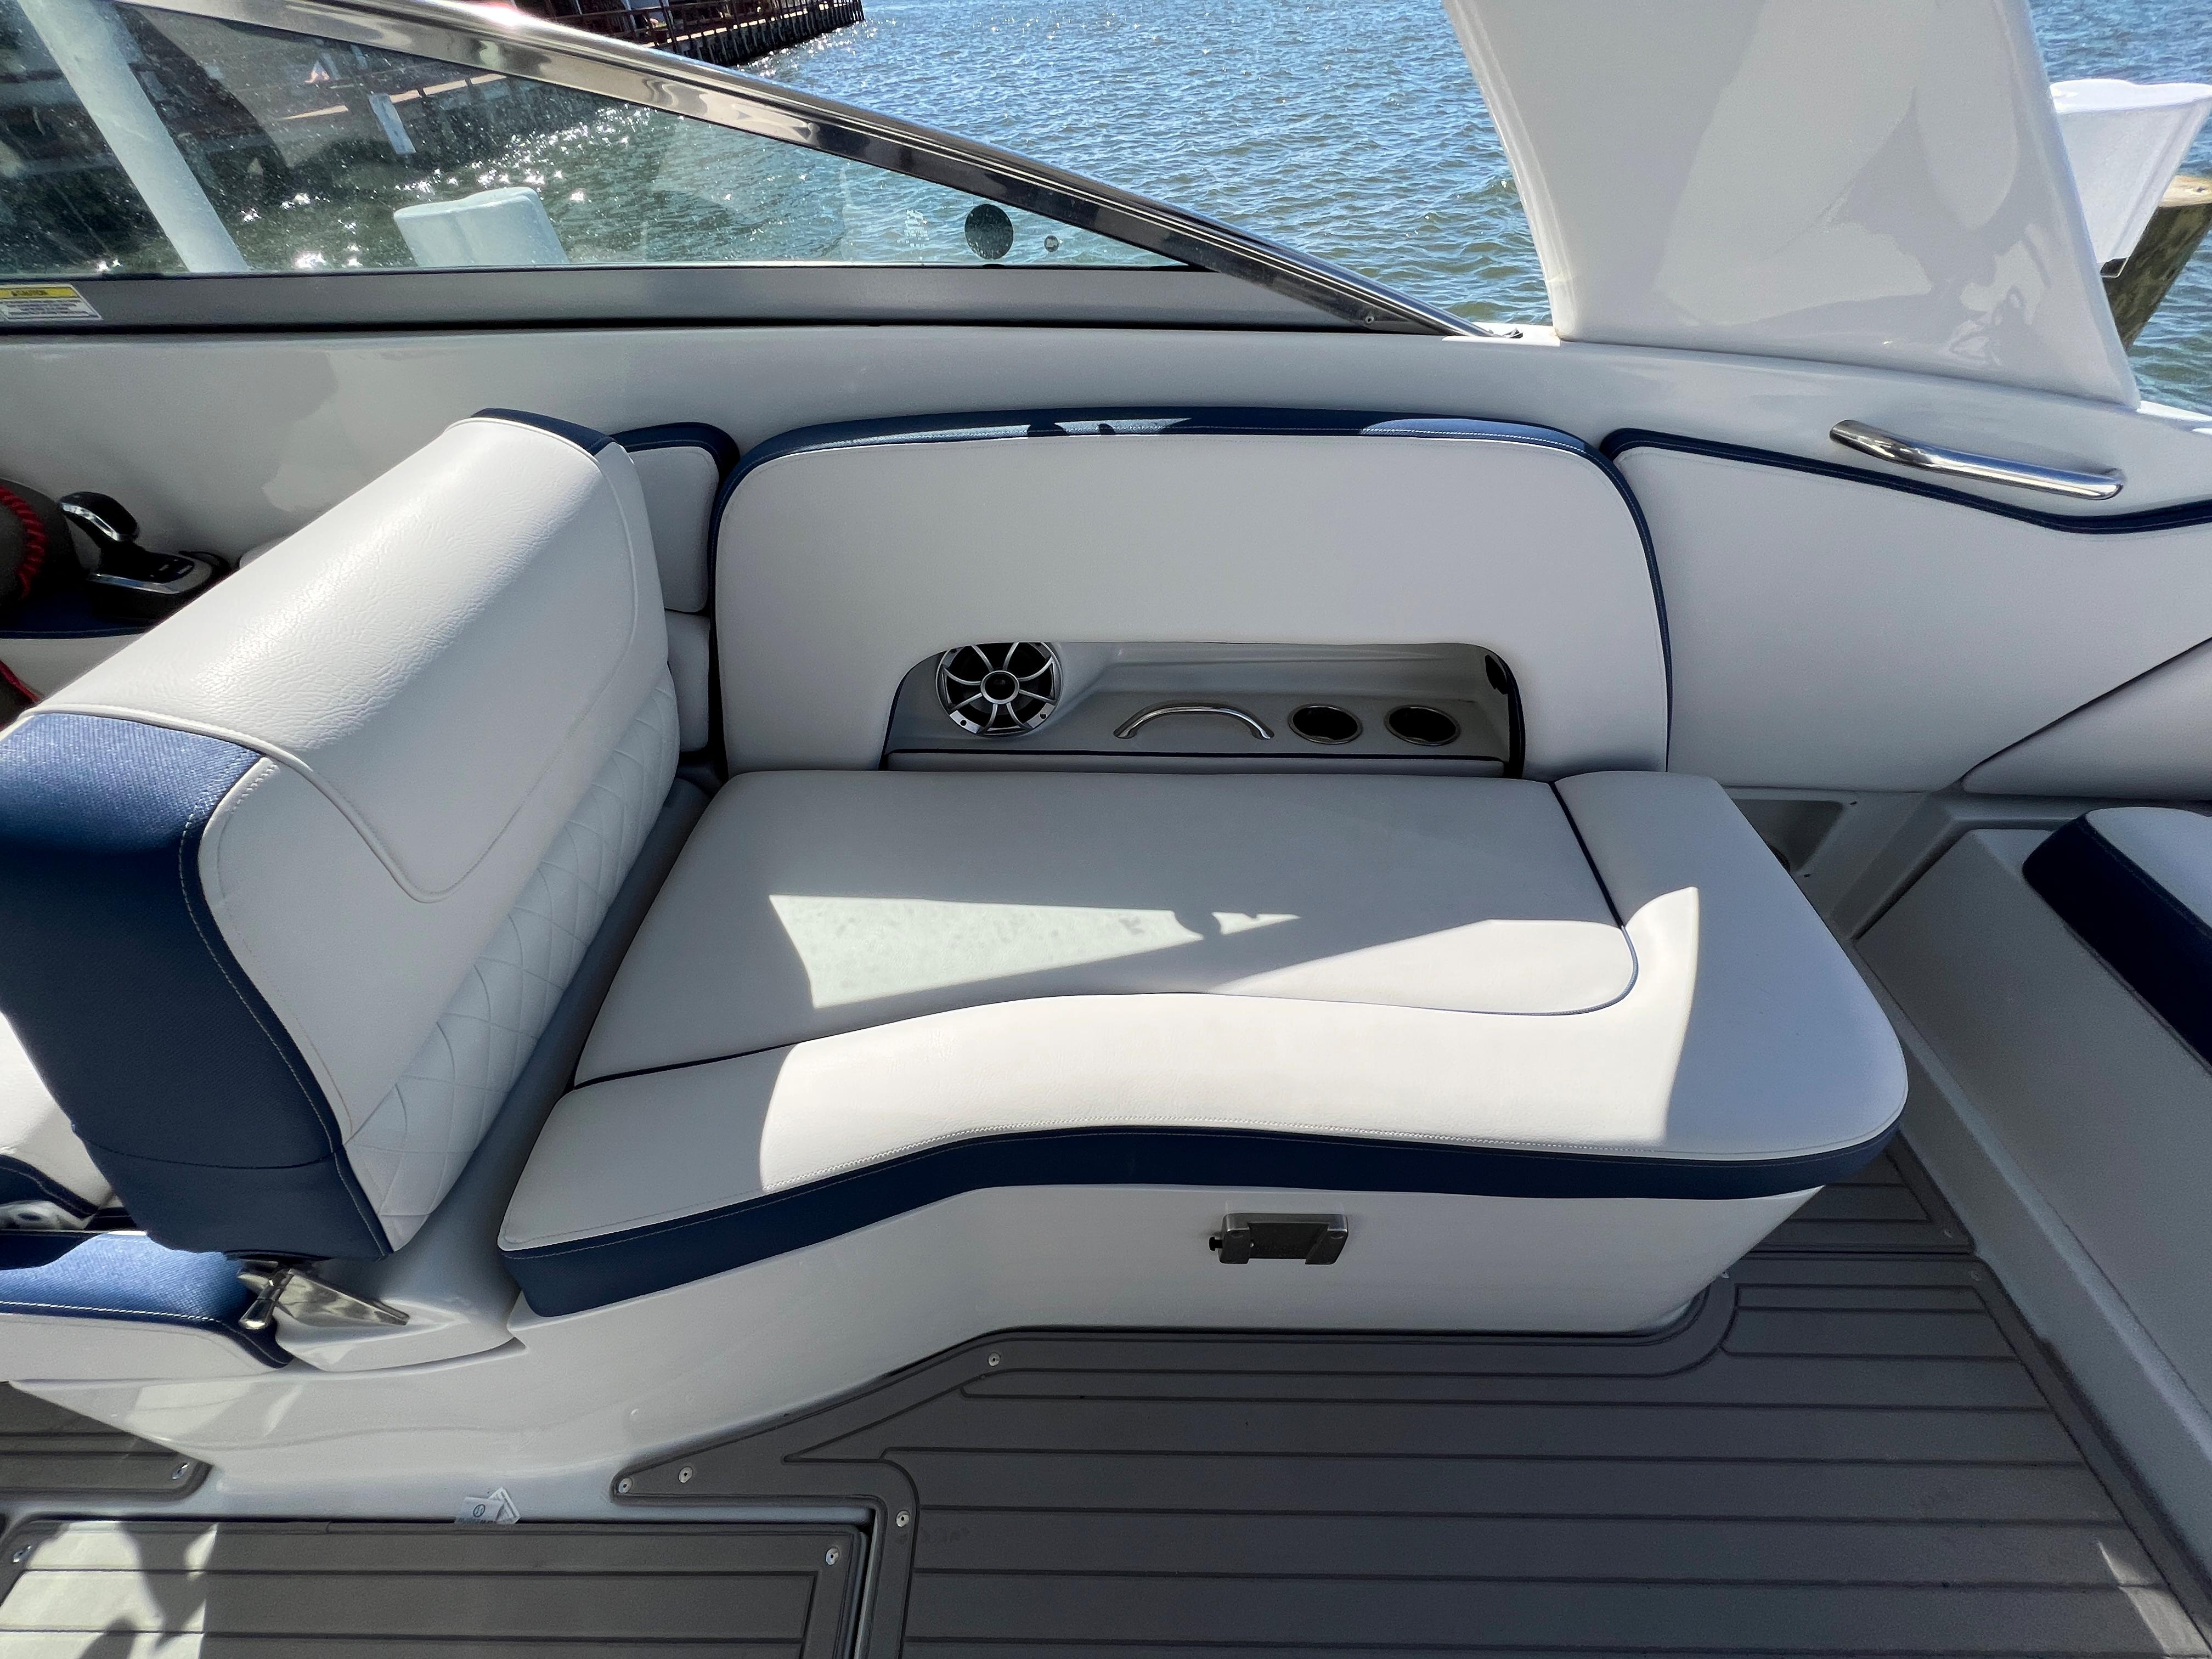 2022 Crownline E305 XS Port Cockpit Seating